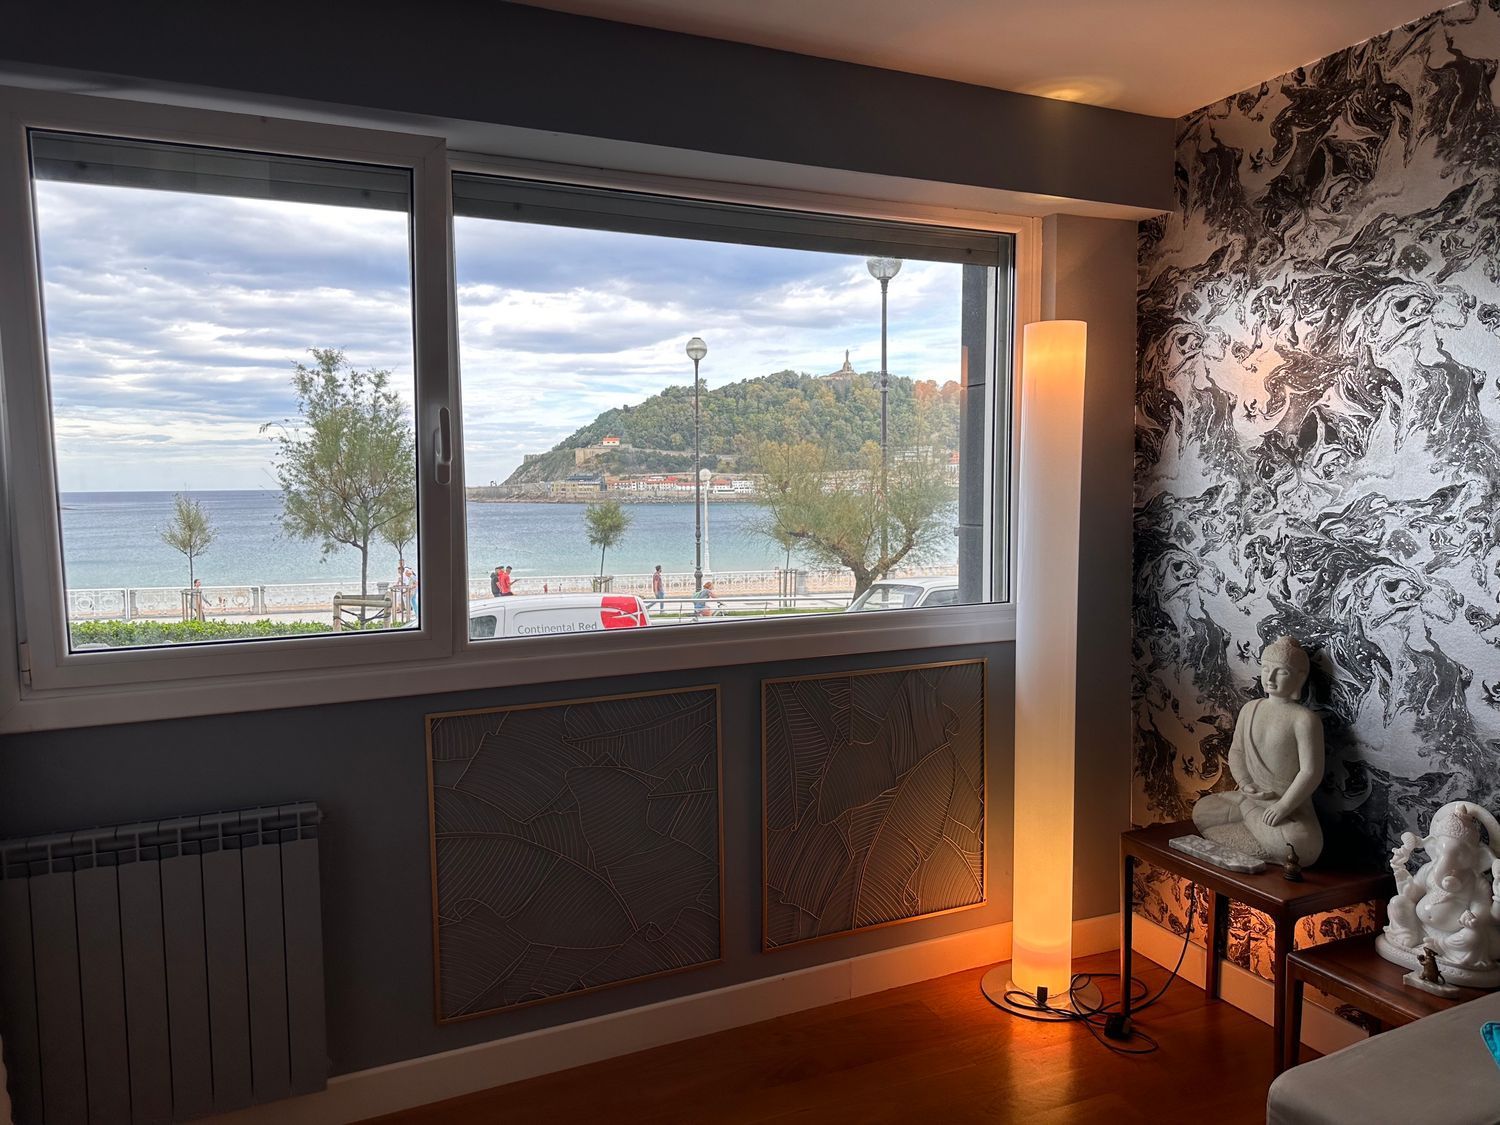 Apartamento en venta en primera línea de mar en Paseo de miraconcha, en Donostia-San Sebastian